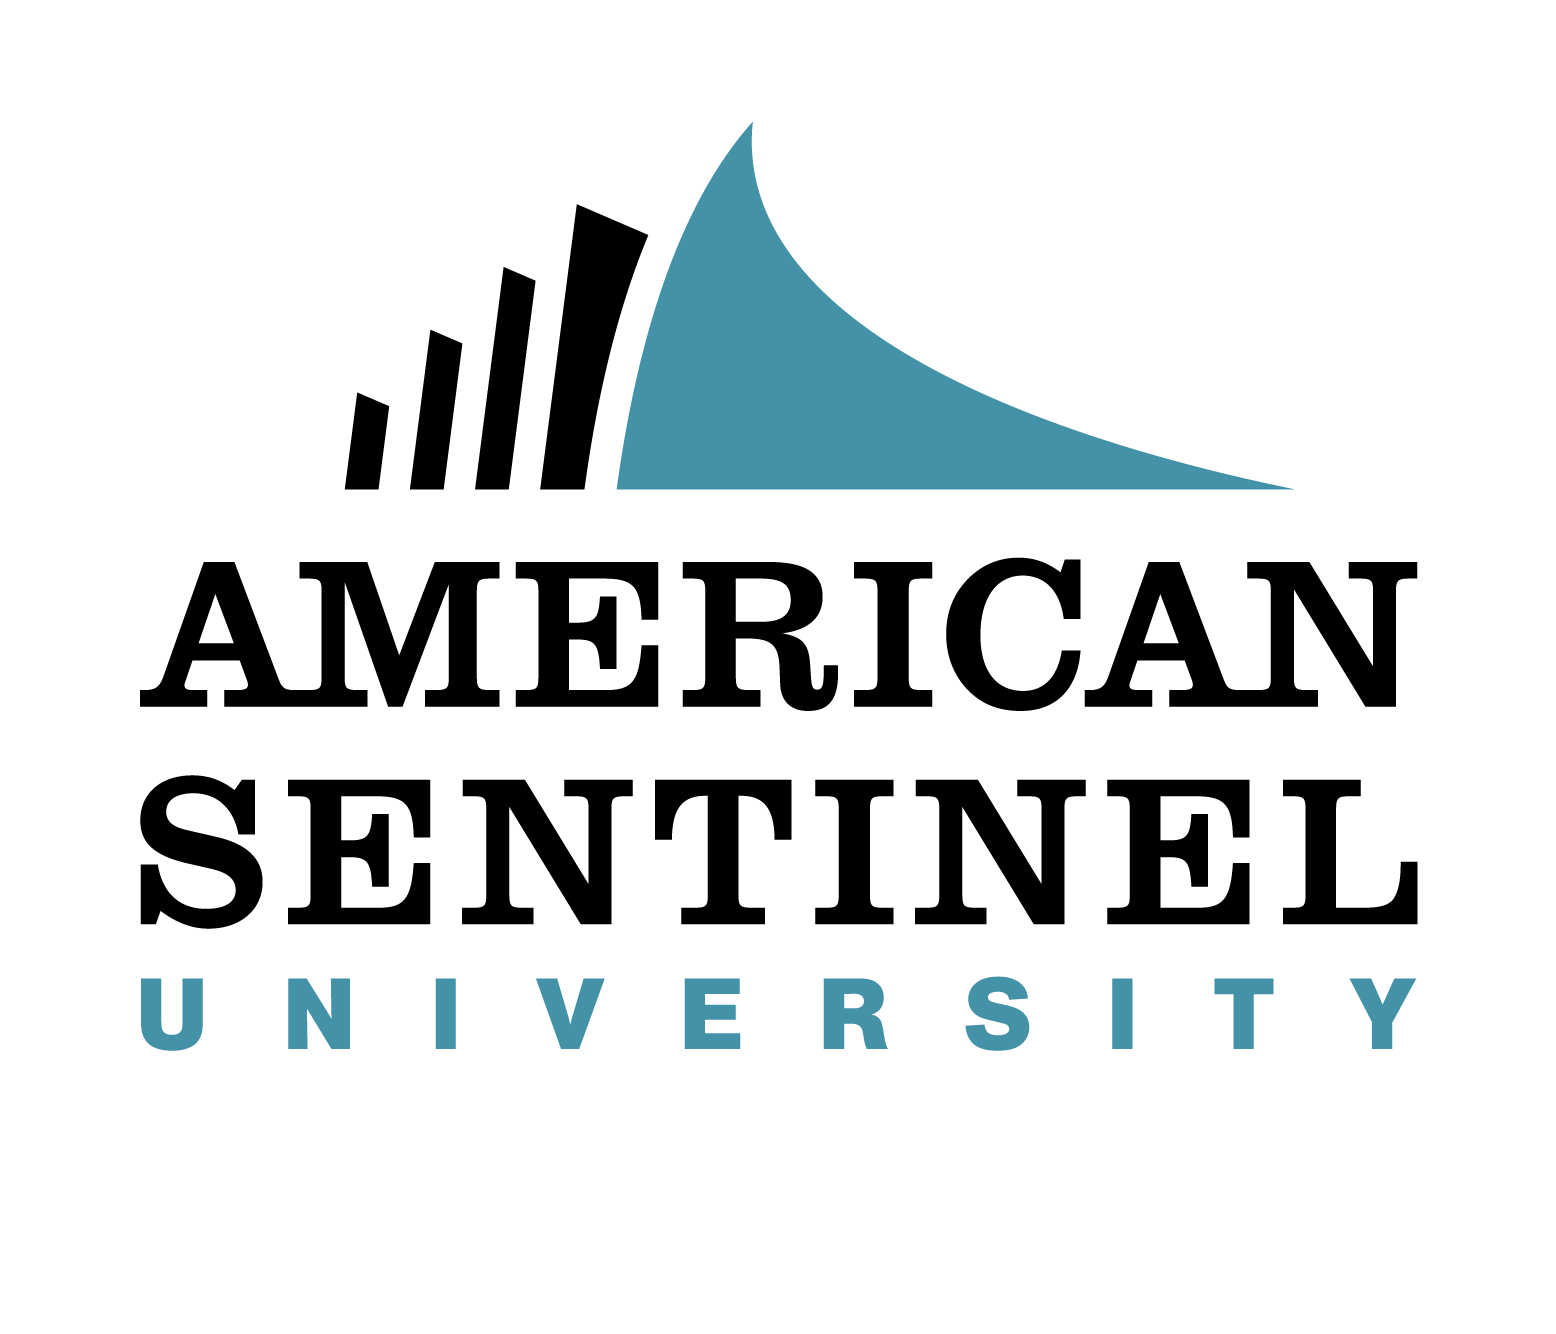 my american sentinel university